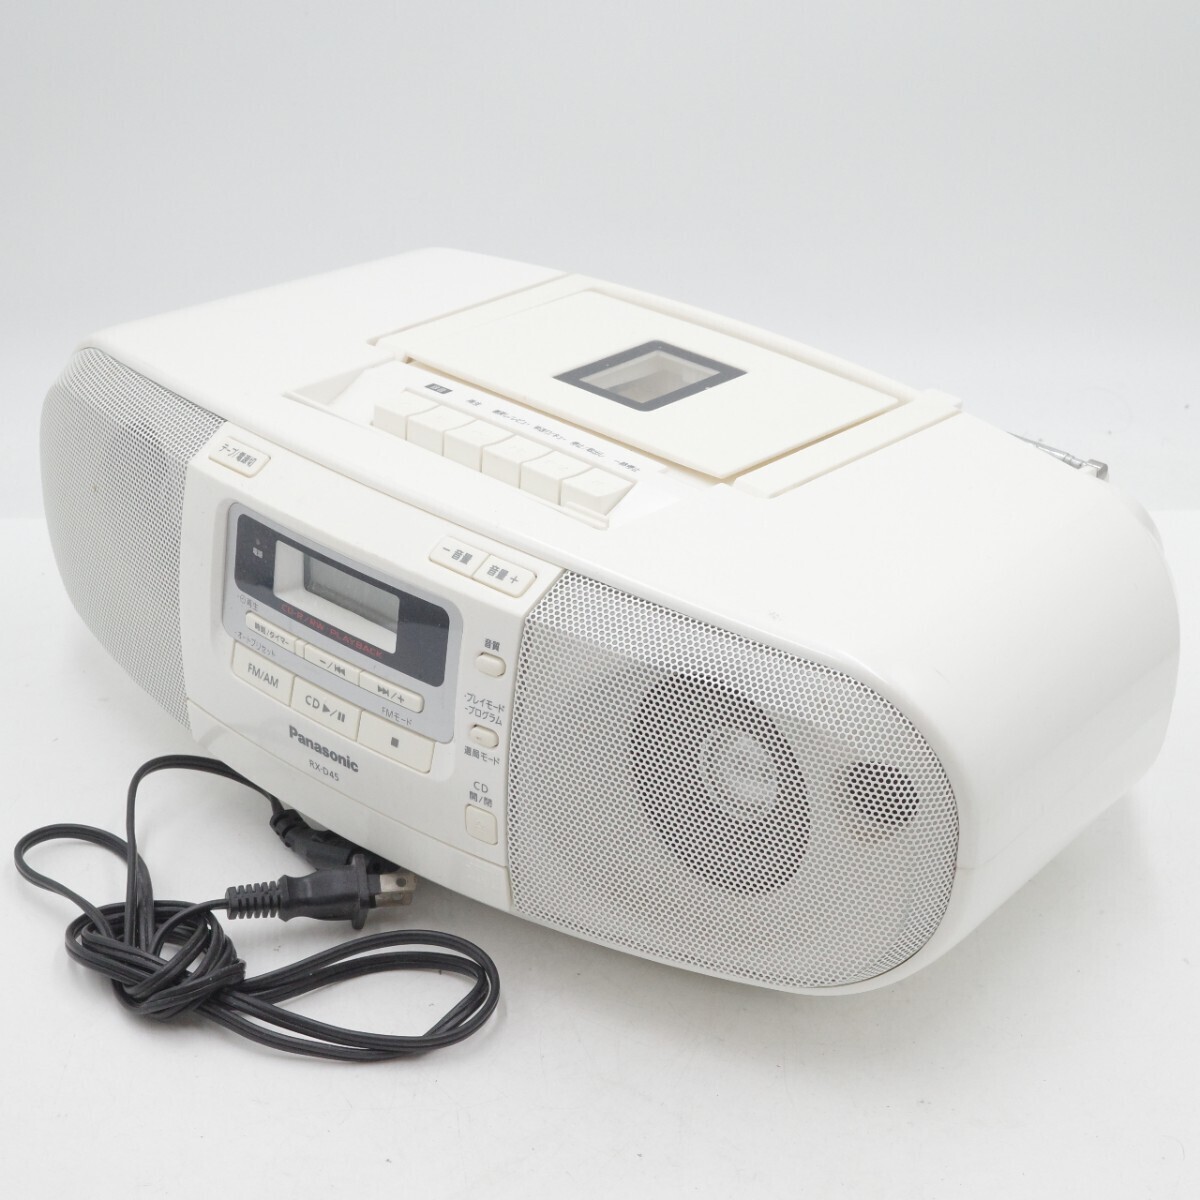 Panasonic パナソニック ポータブルステレオCDシステム ラジカセ RX-D45 ホワイト オーディオ機器 動作確認済みの画像1